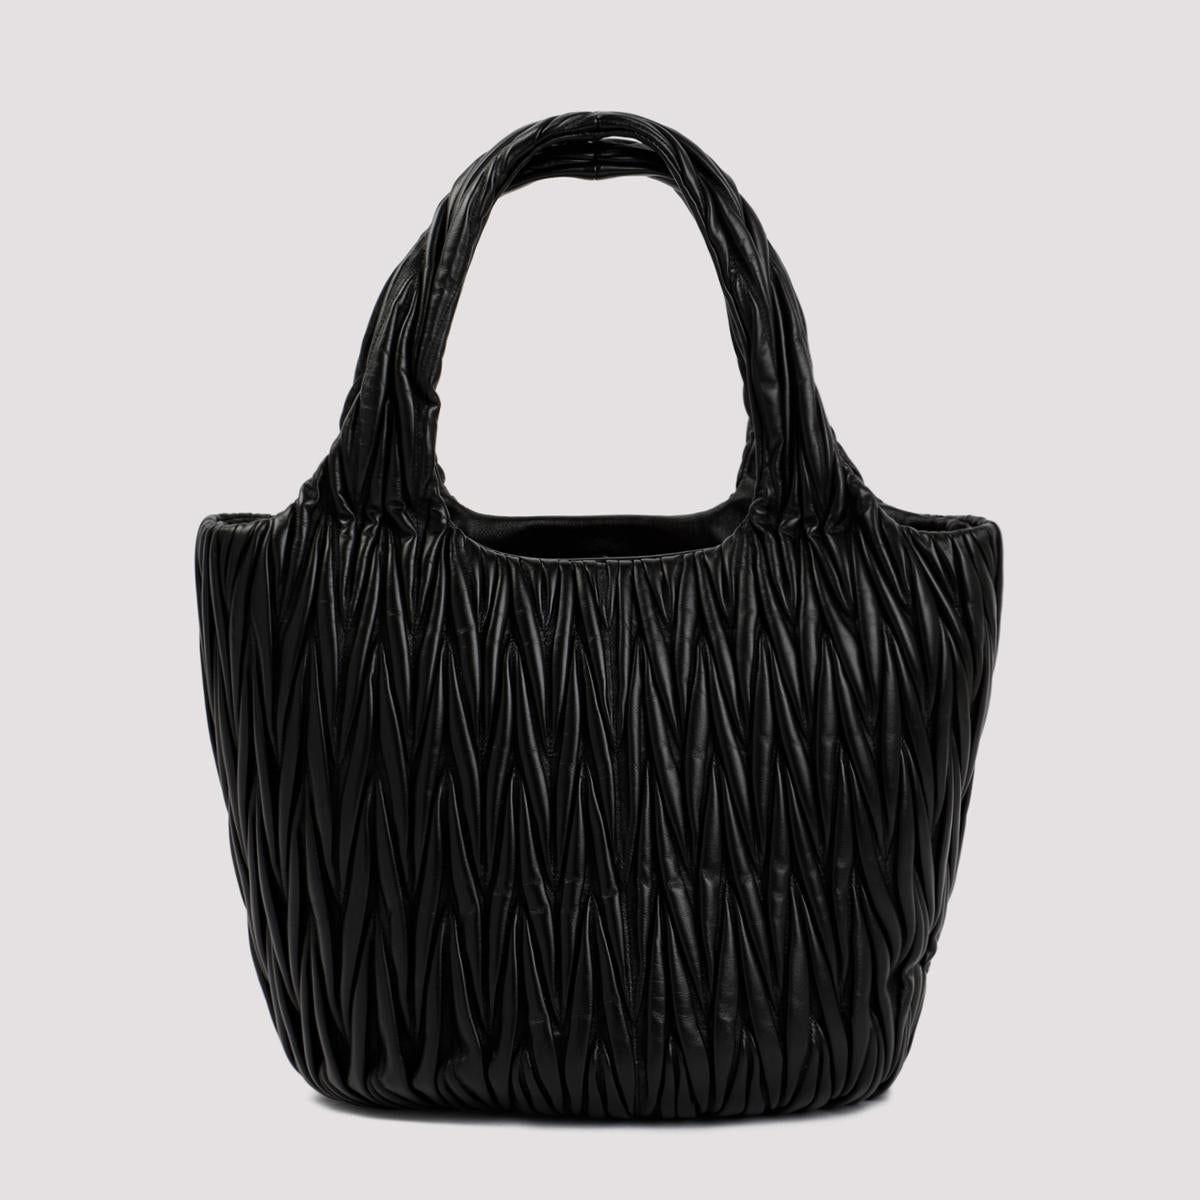 Miu Miu Shopping Bag Black, Tote